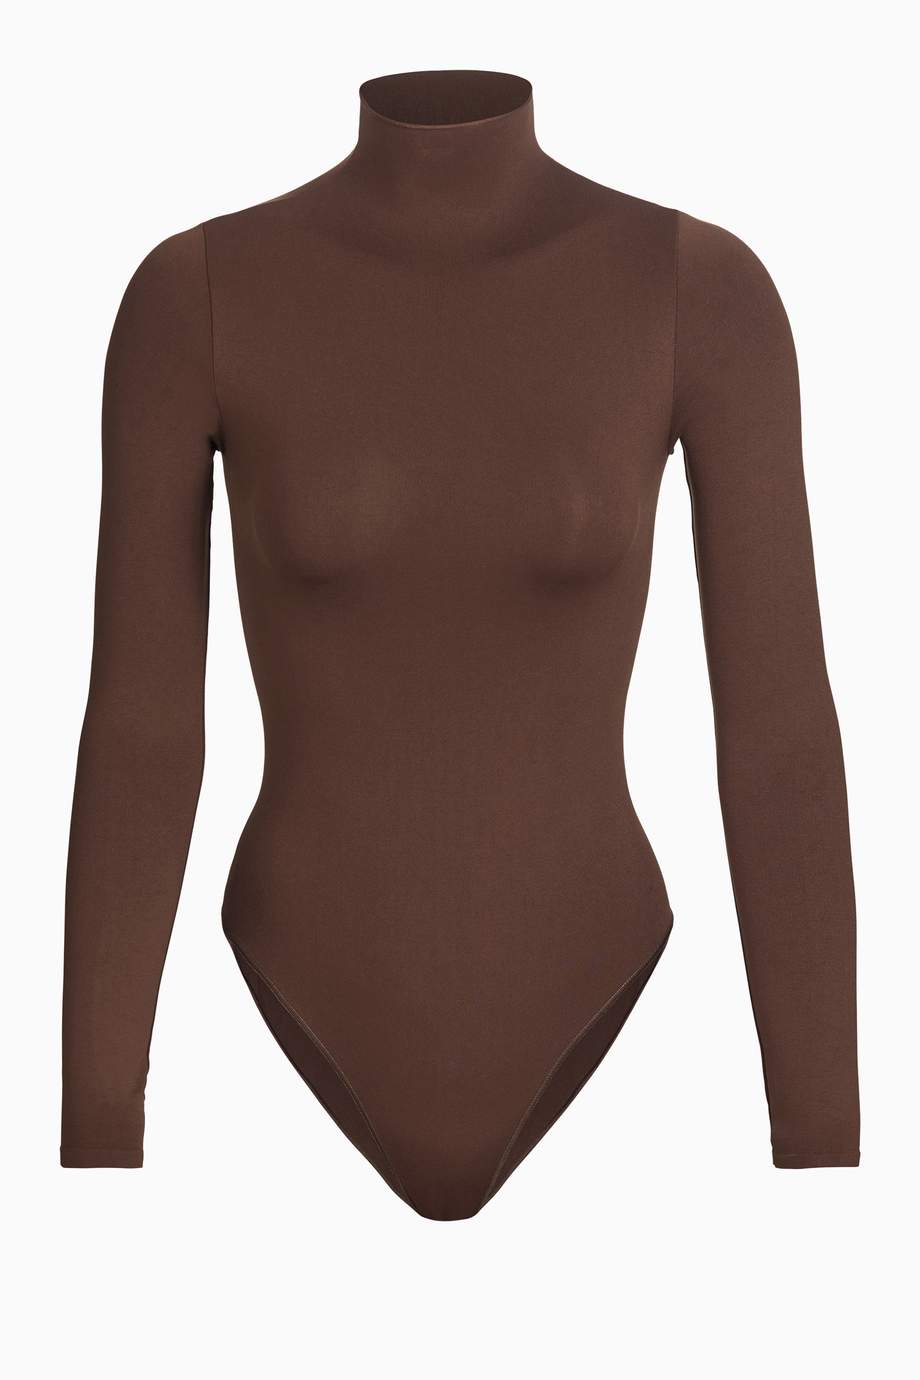 Shop Skims SMOKEY QUARTZ Essential Mock Neck Long Sleeve Bodysuit for